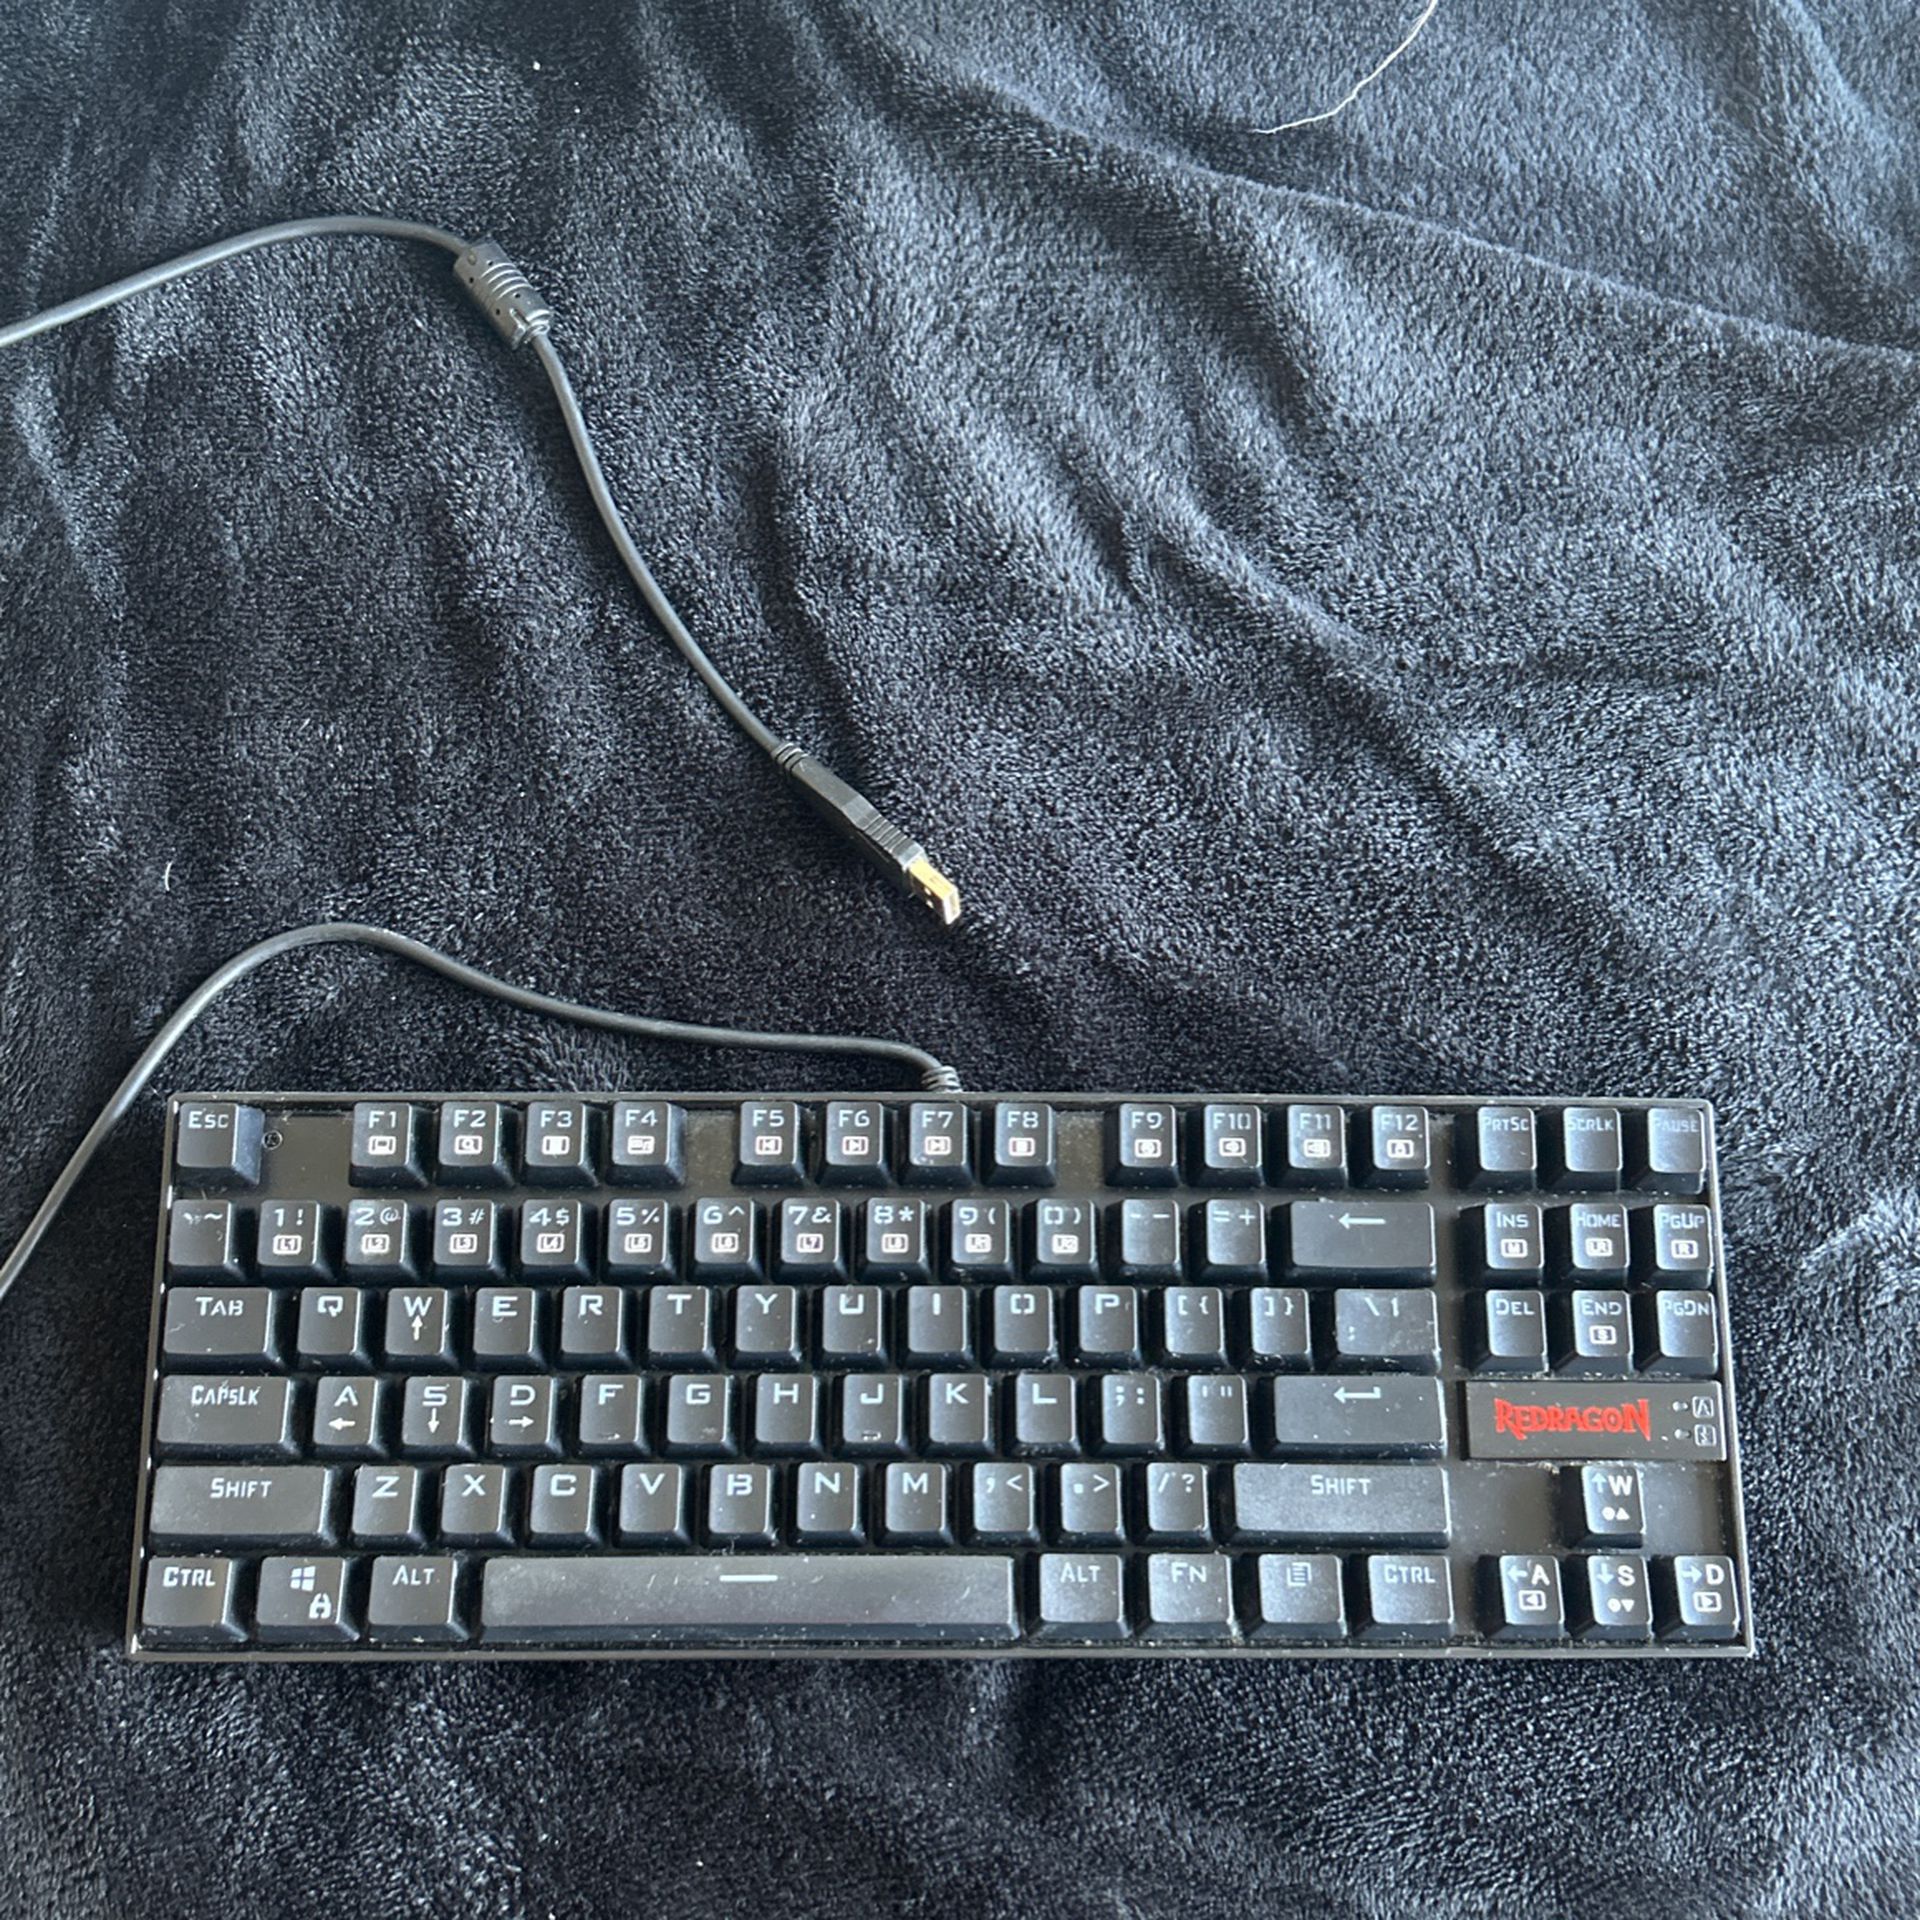 Redragon K552 Wired Keyboard